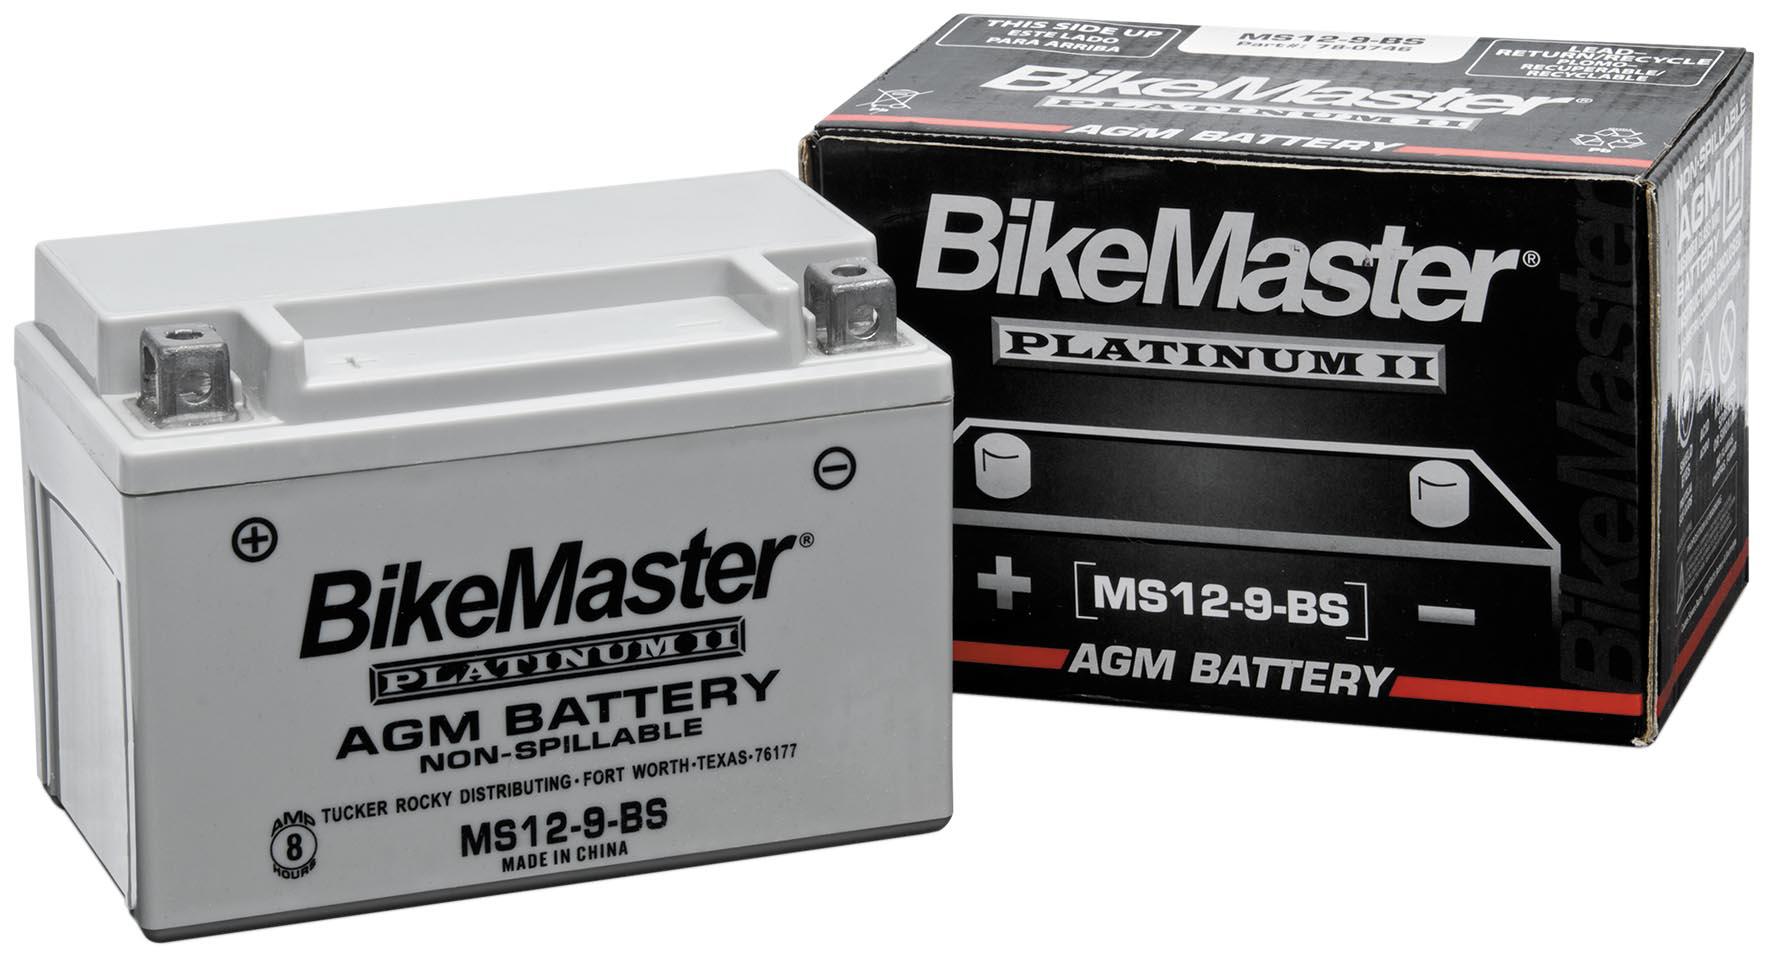 Bikemaster agm platinum ii battery  ms12-7b-bs